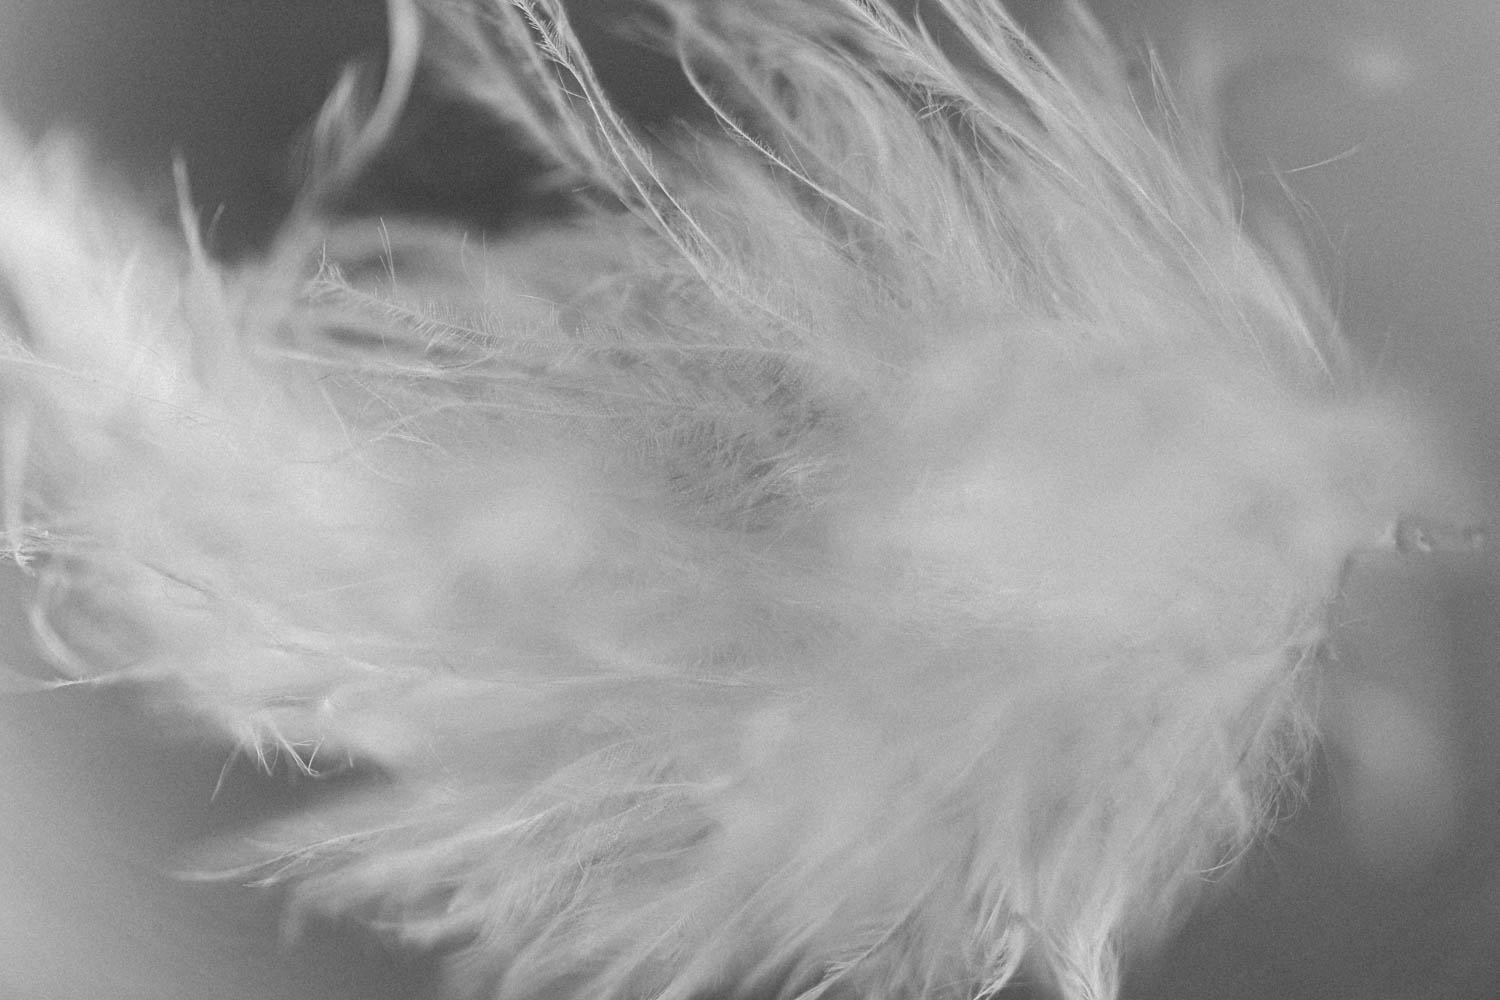 Baby bird fluffy white feather photo.